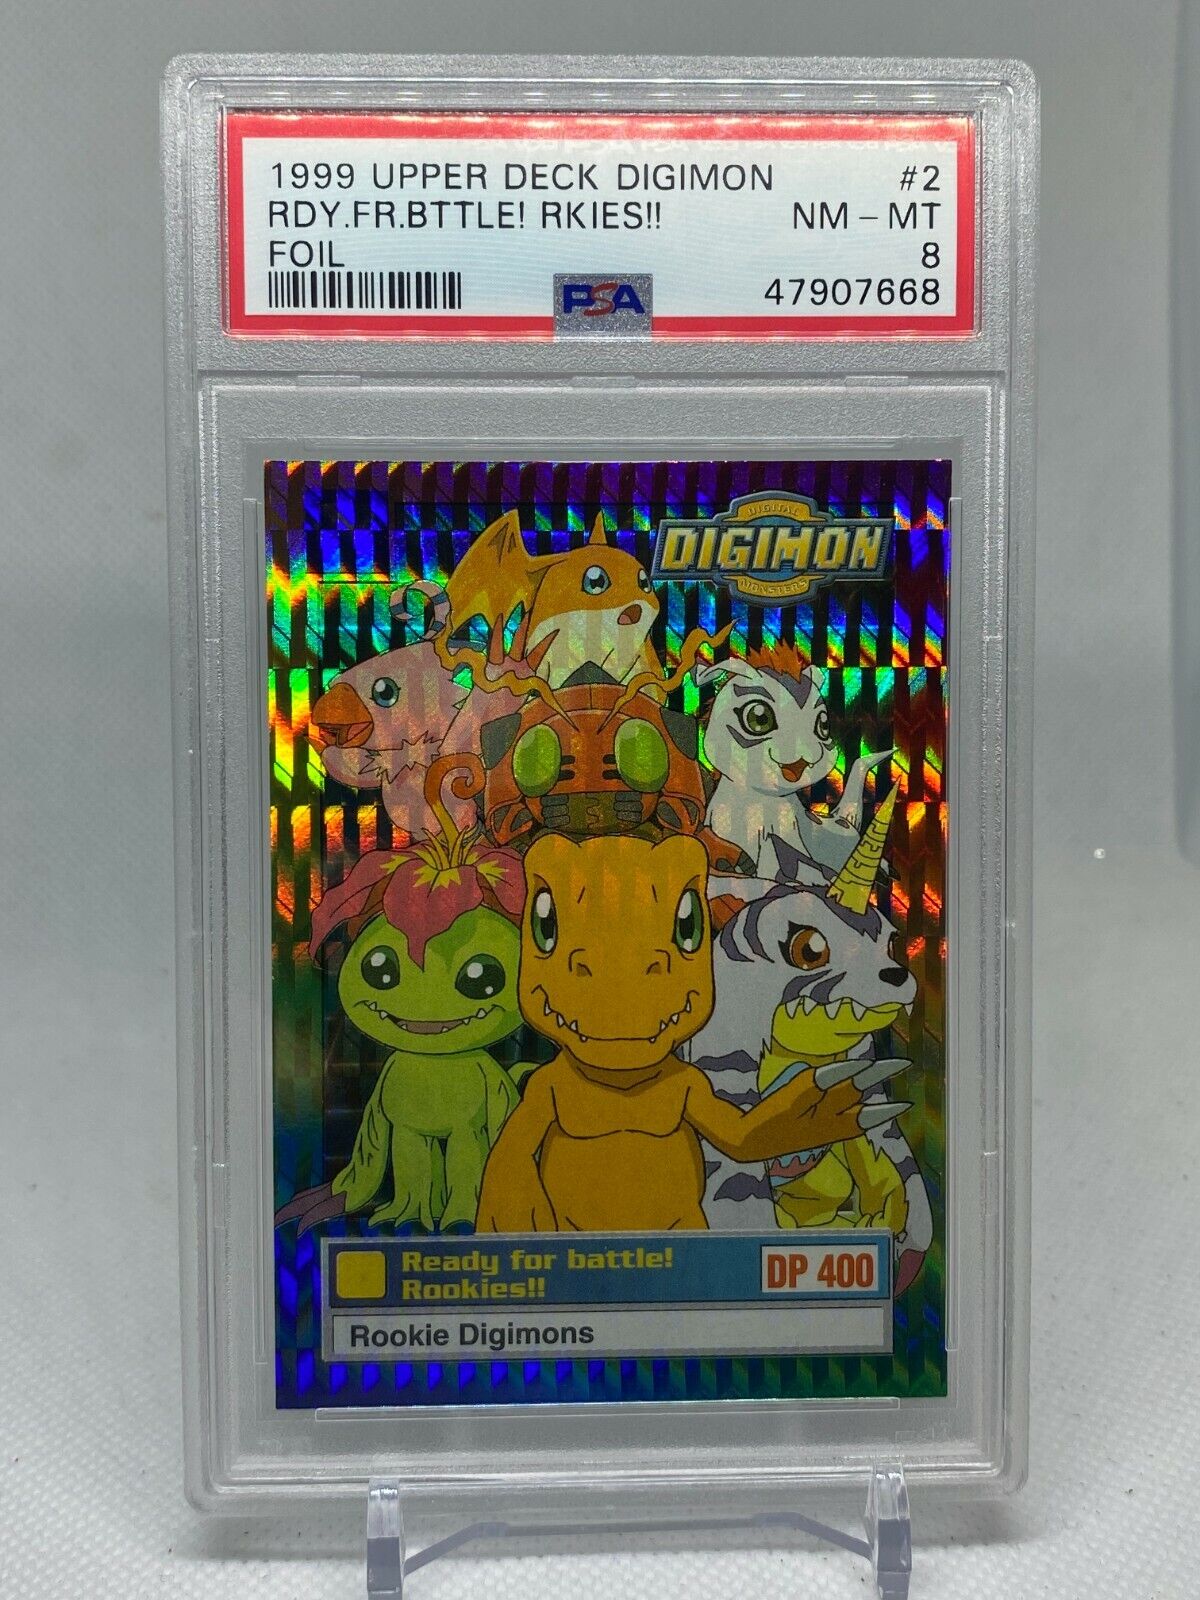 1999 Upper Deck Digimon RDY. FR.BTTLE RKIES FOIL - Psa 8 - POP 1